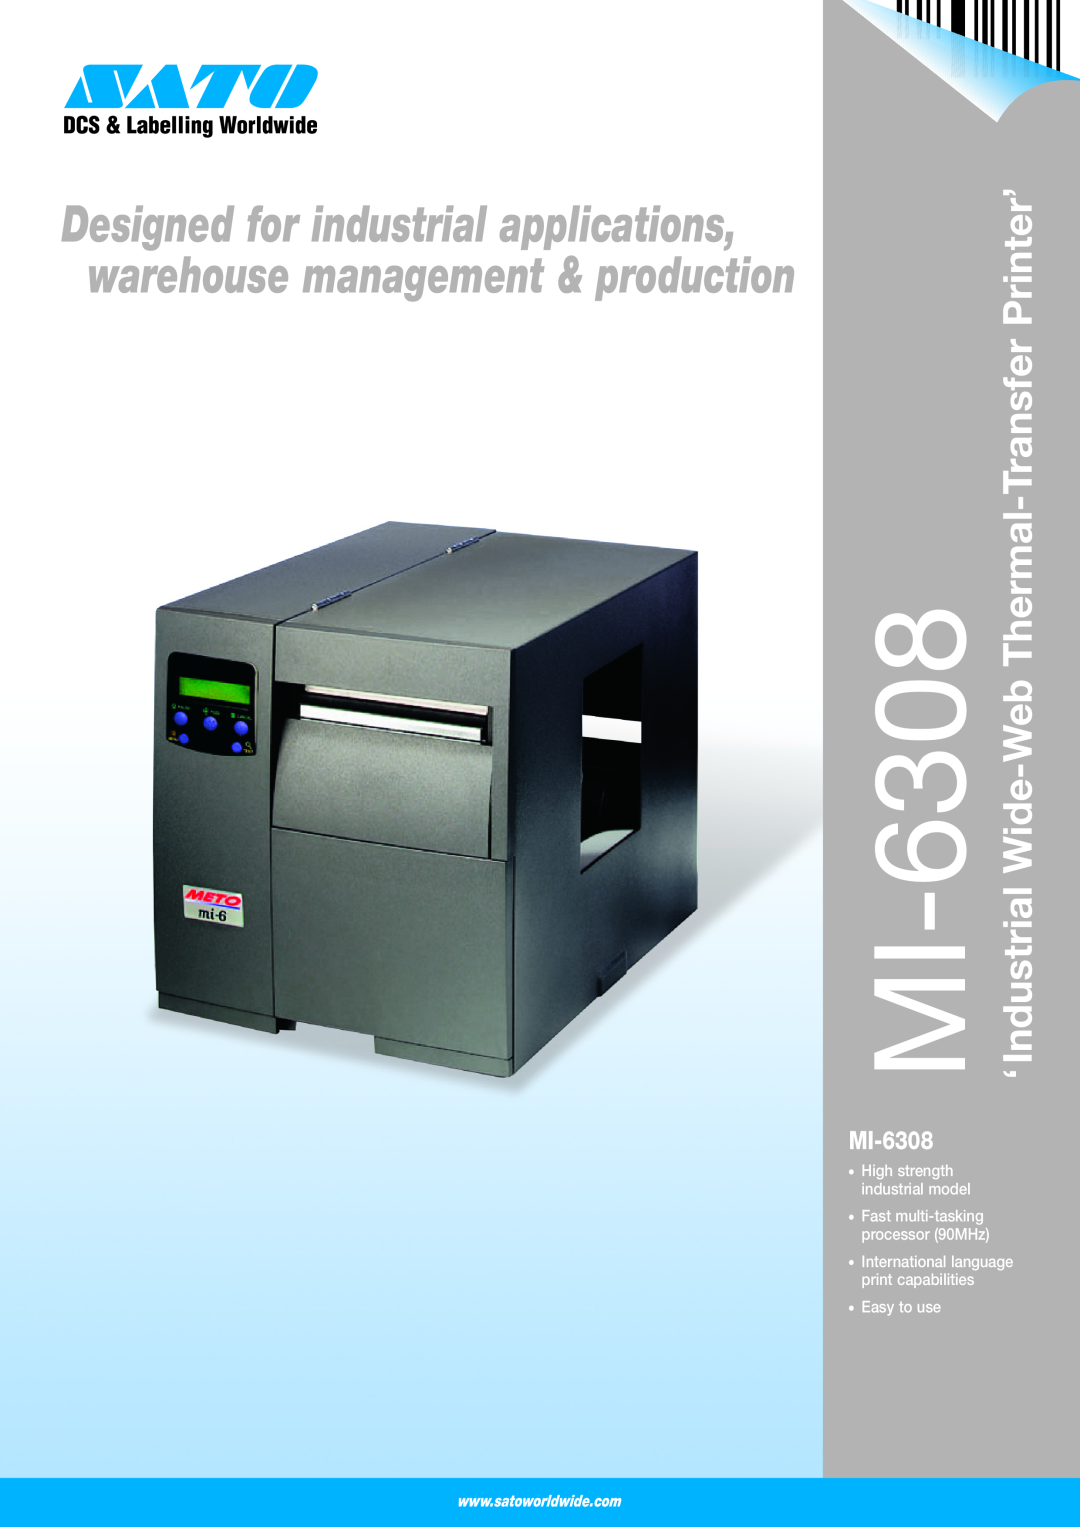 SATO MI-6308 manual ‘ Industrial Wide-Web Thermal-Transfer Printer’, International language print capabilities 